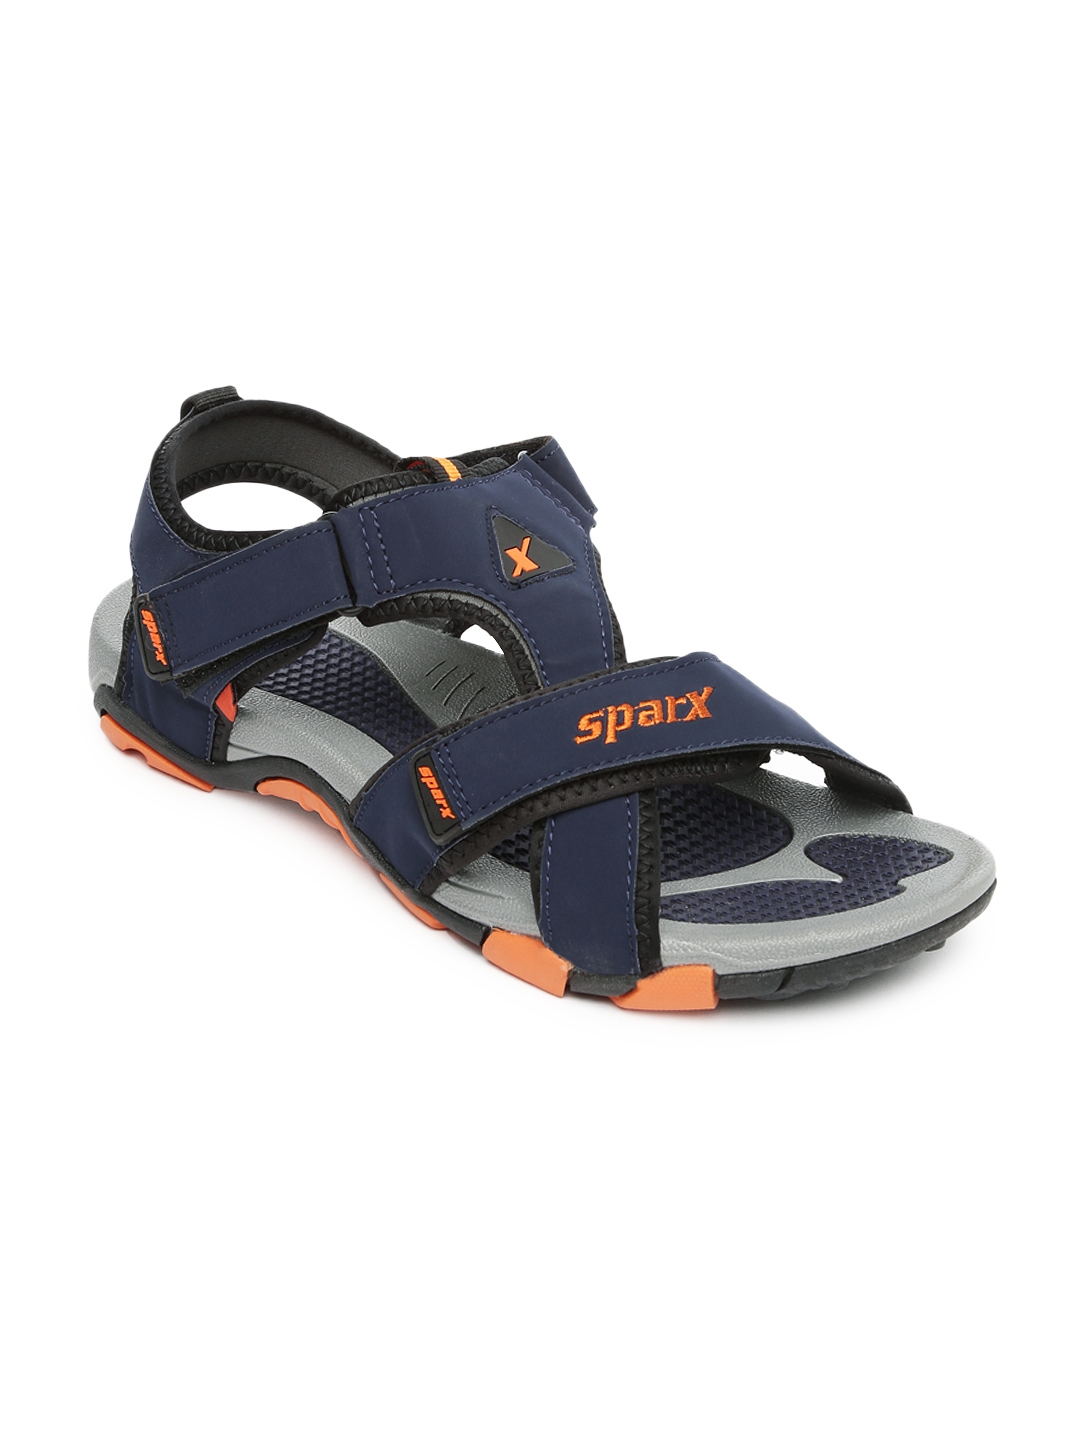 sparx sports sandals